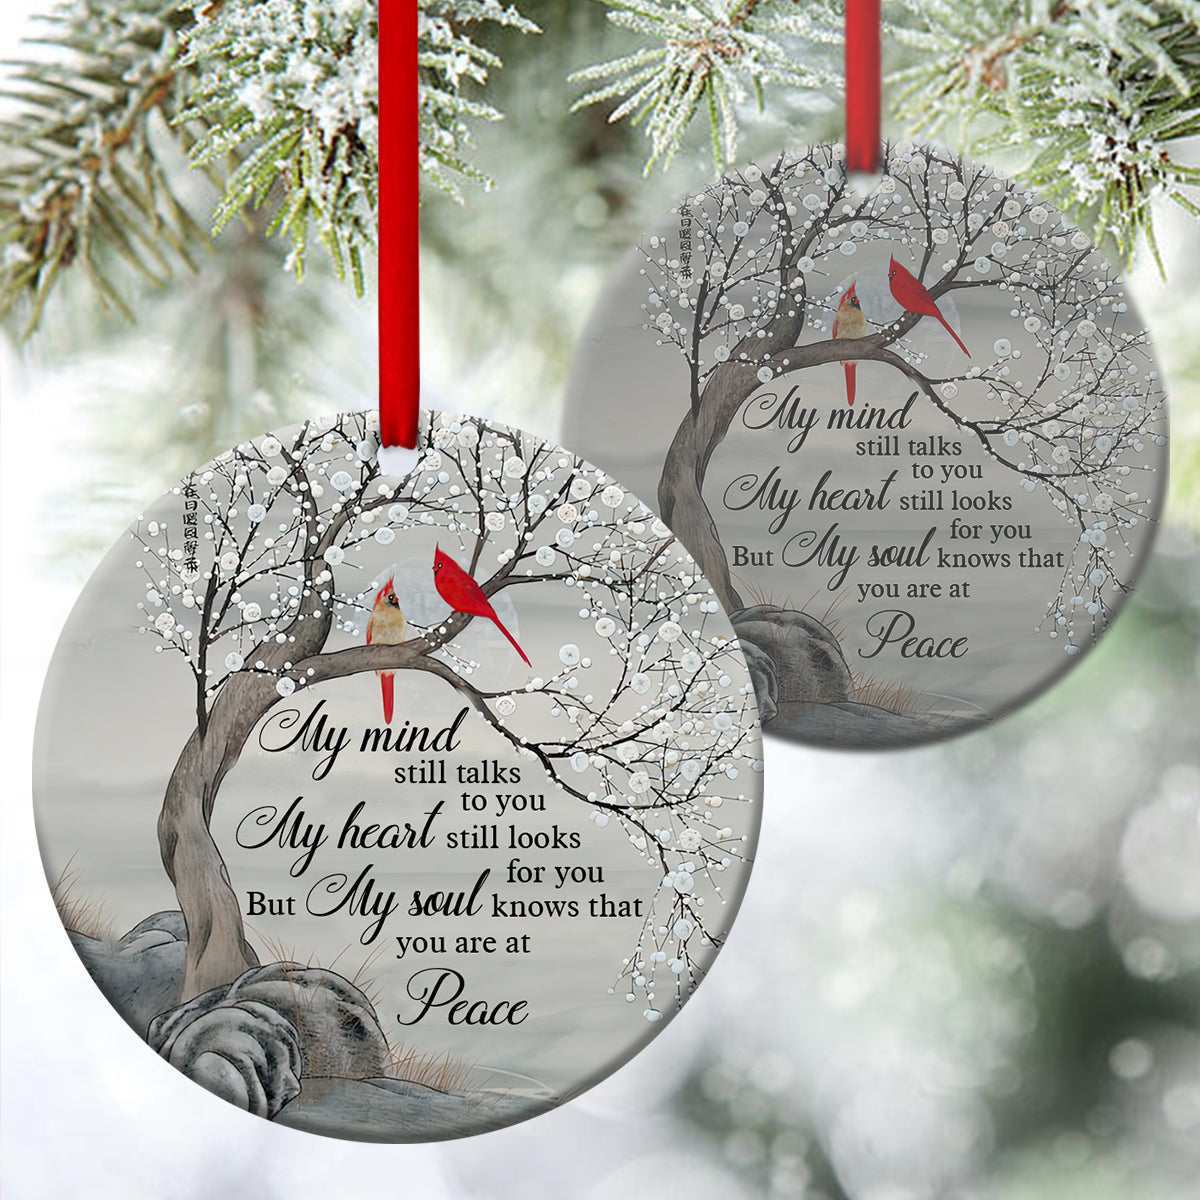 Cardinal Bird Ceramic Circle Ornament - You Are At Peace - Ornaments Hanging Gift - Nativity Ornaments